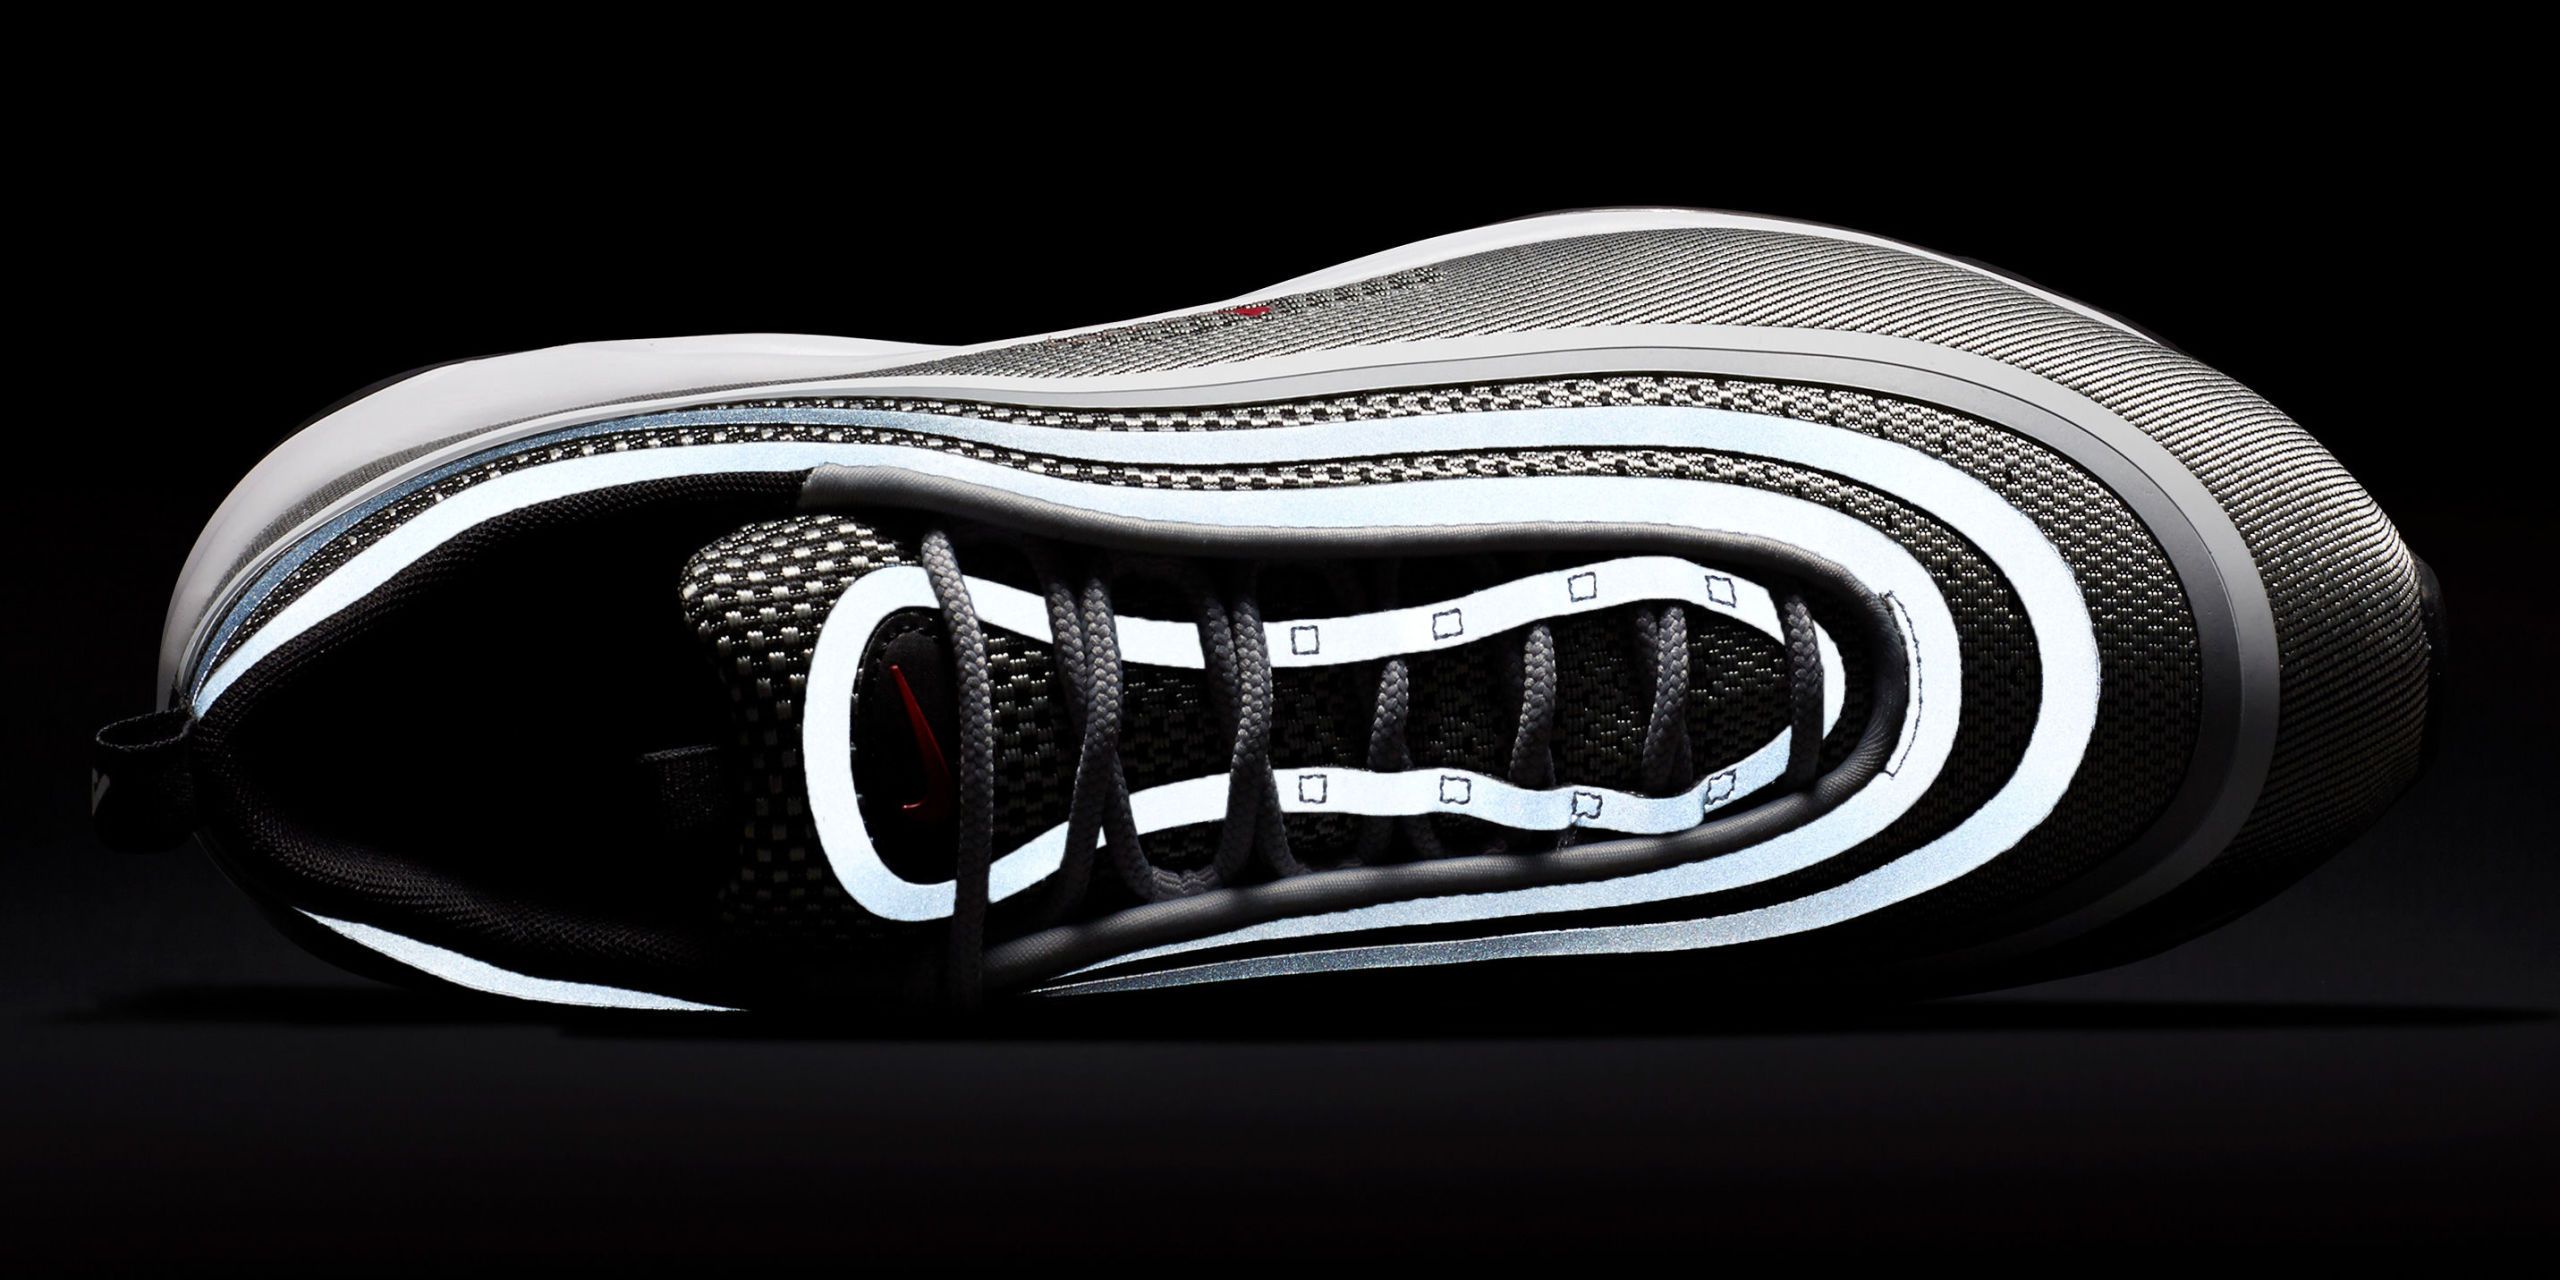  Nike Coole Hintergrundbild 2560x1280. Nike Sportswear's Design Director on the New Breed of Air Max 97s